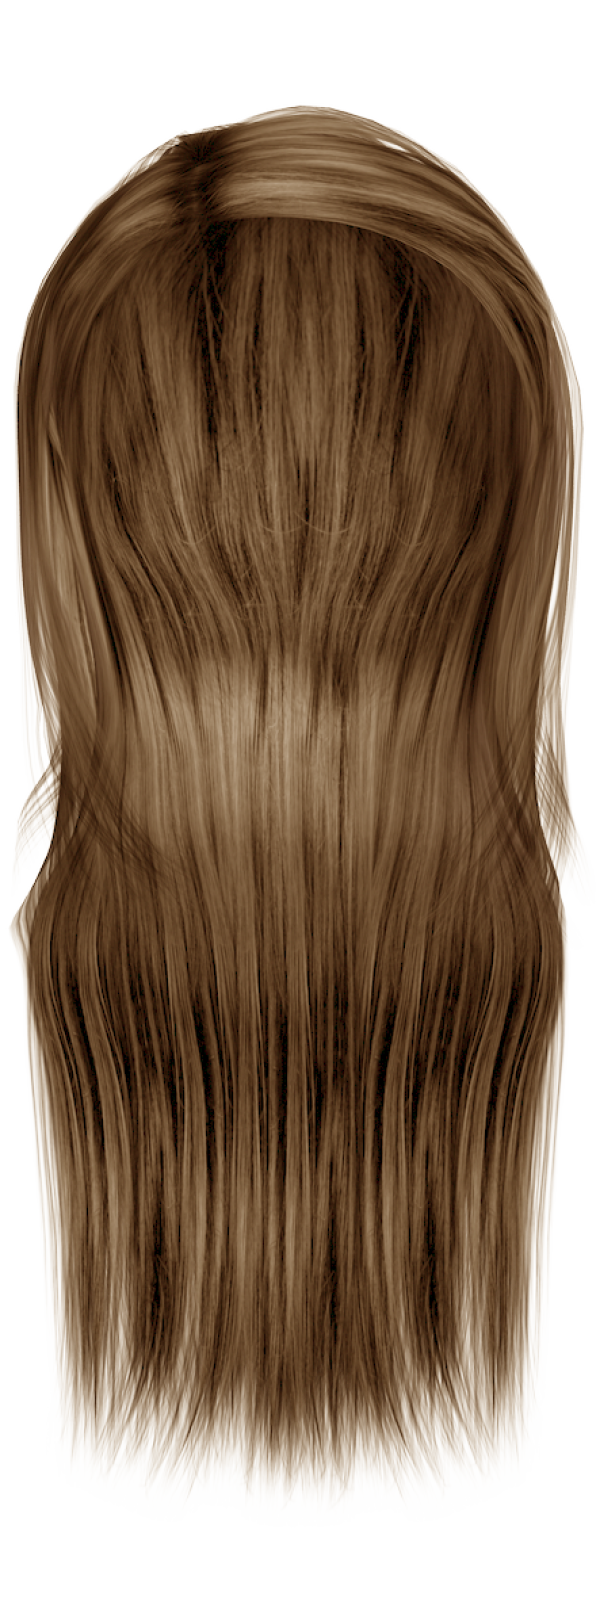 Hair Free PNG Image Download 13